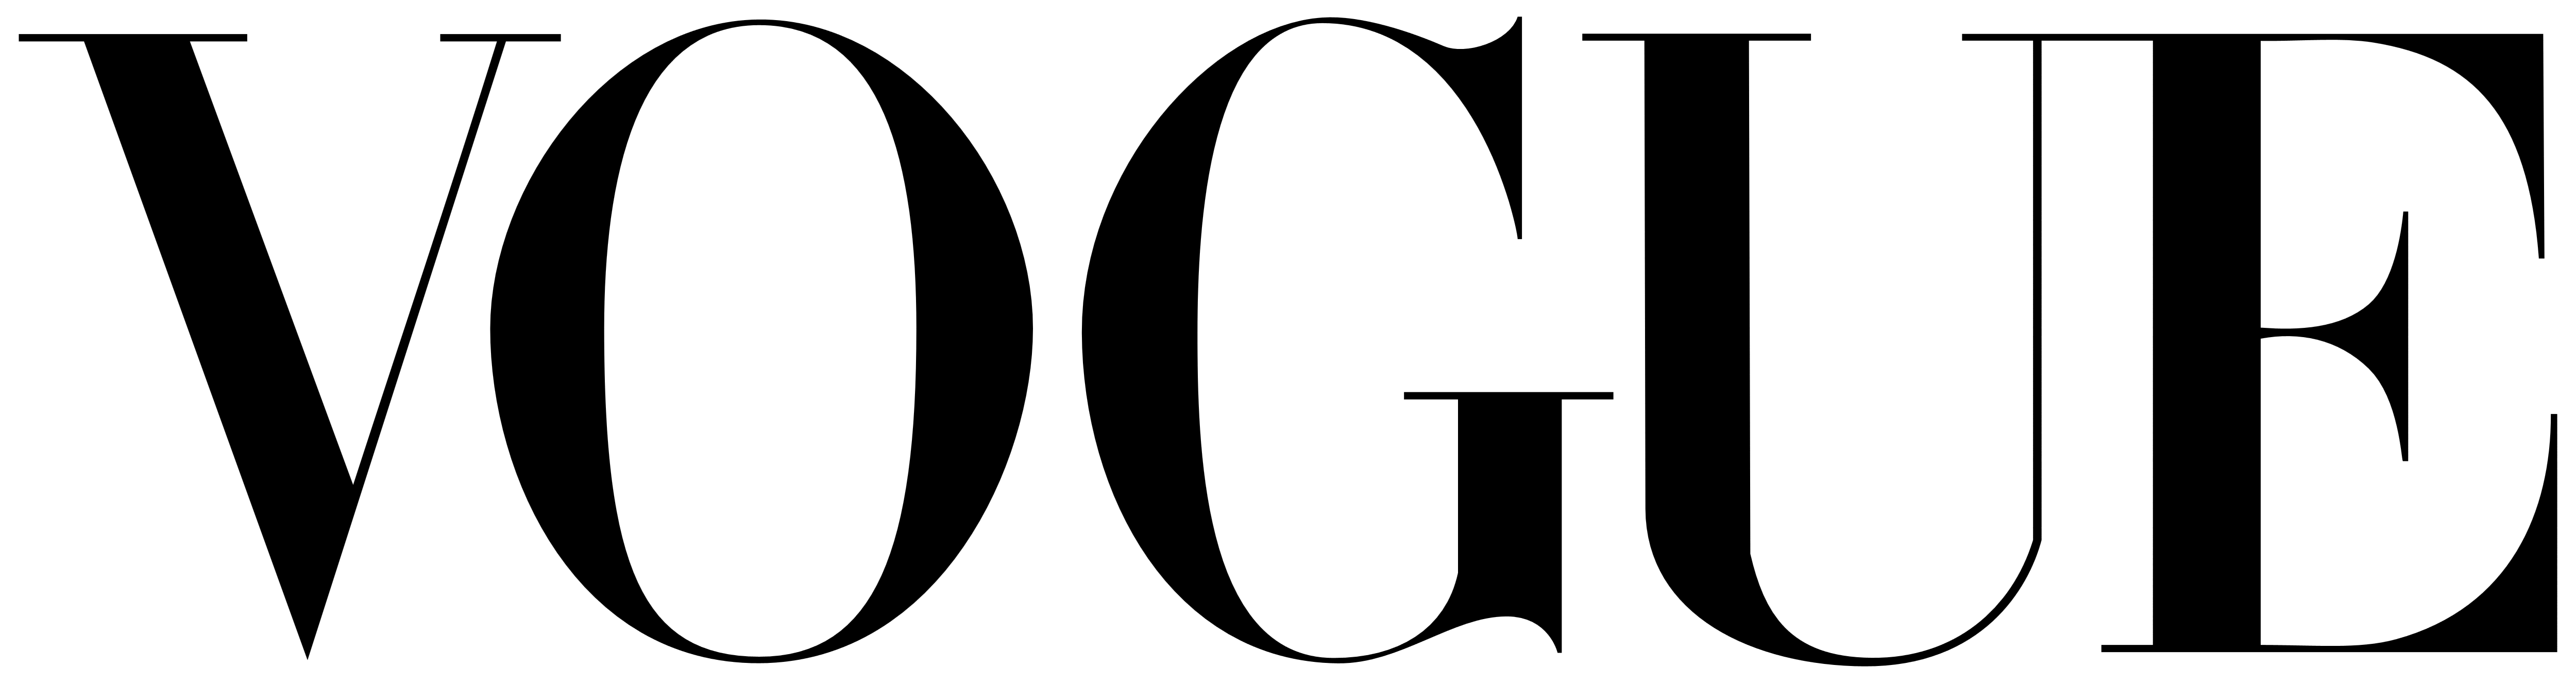 Vogue White Logo - LogoDix